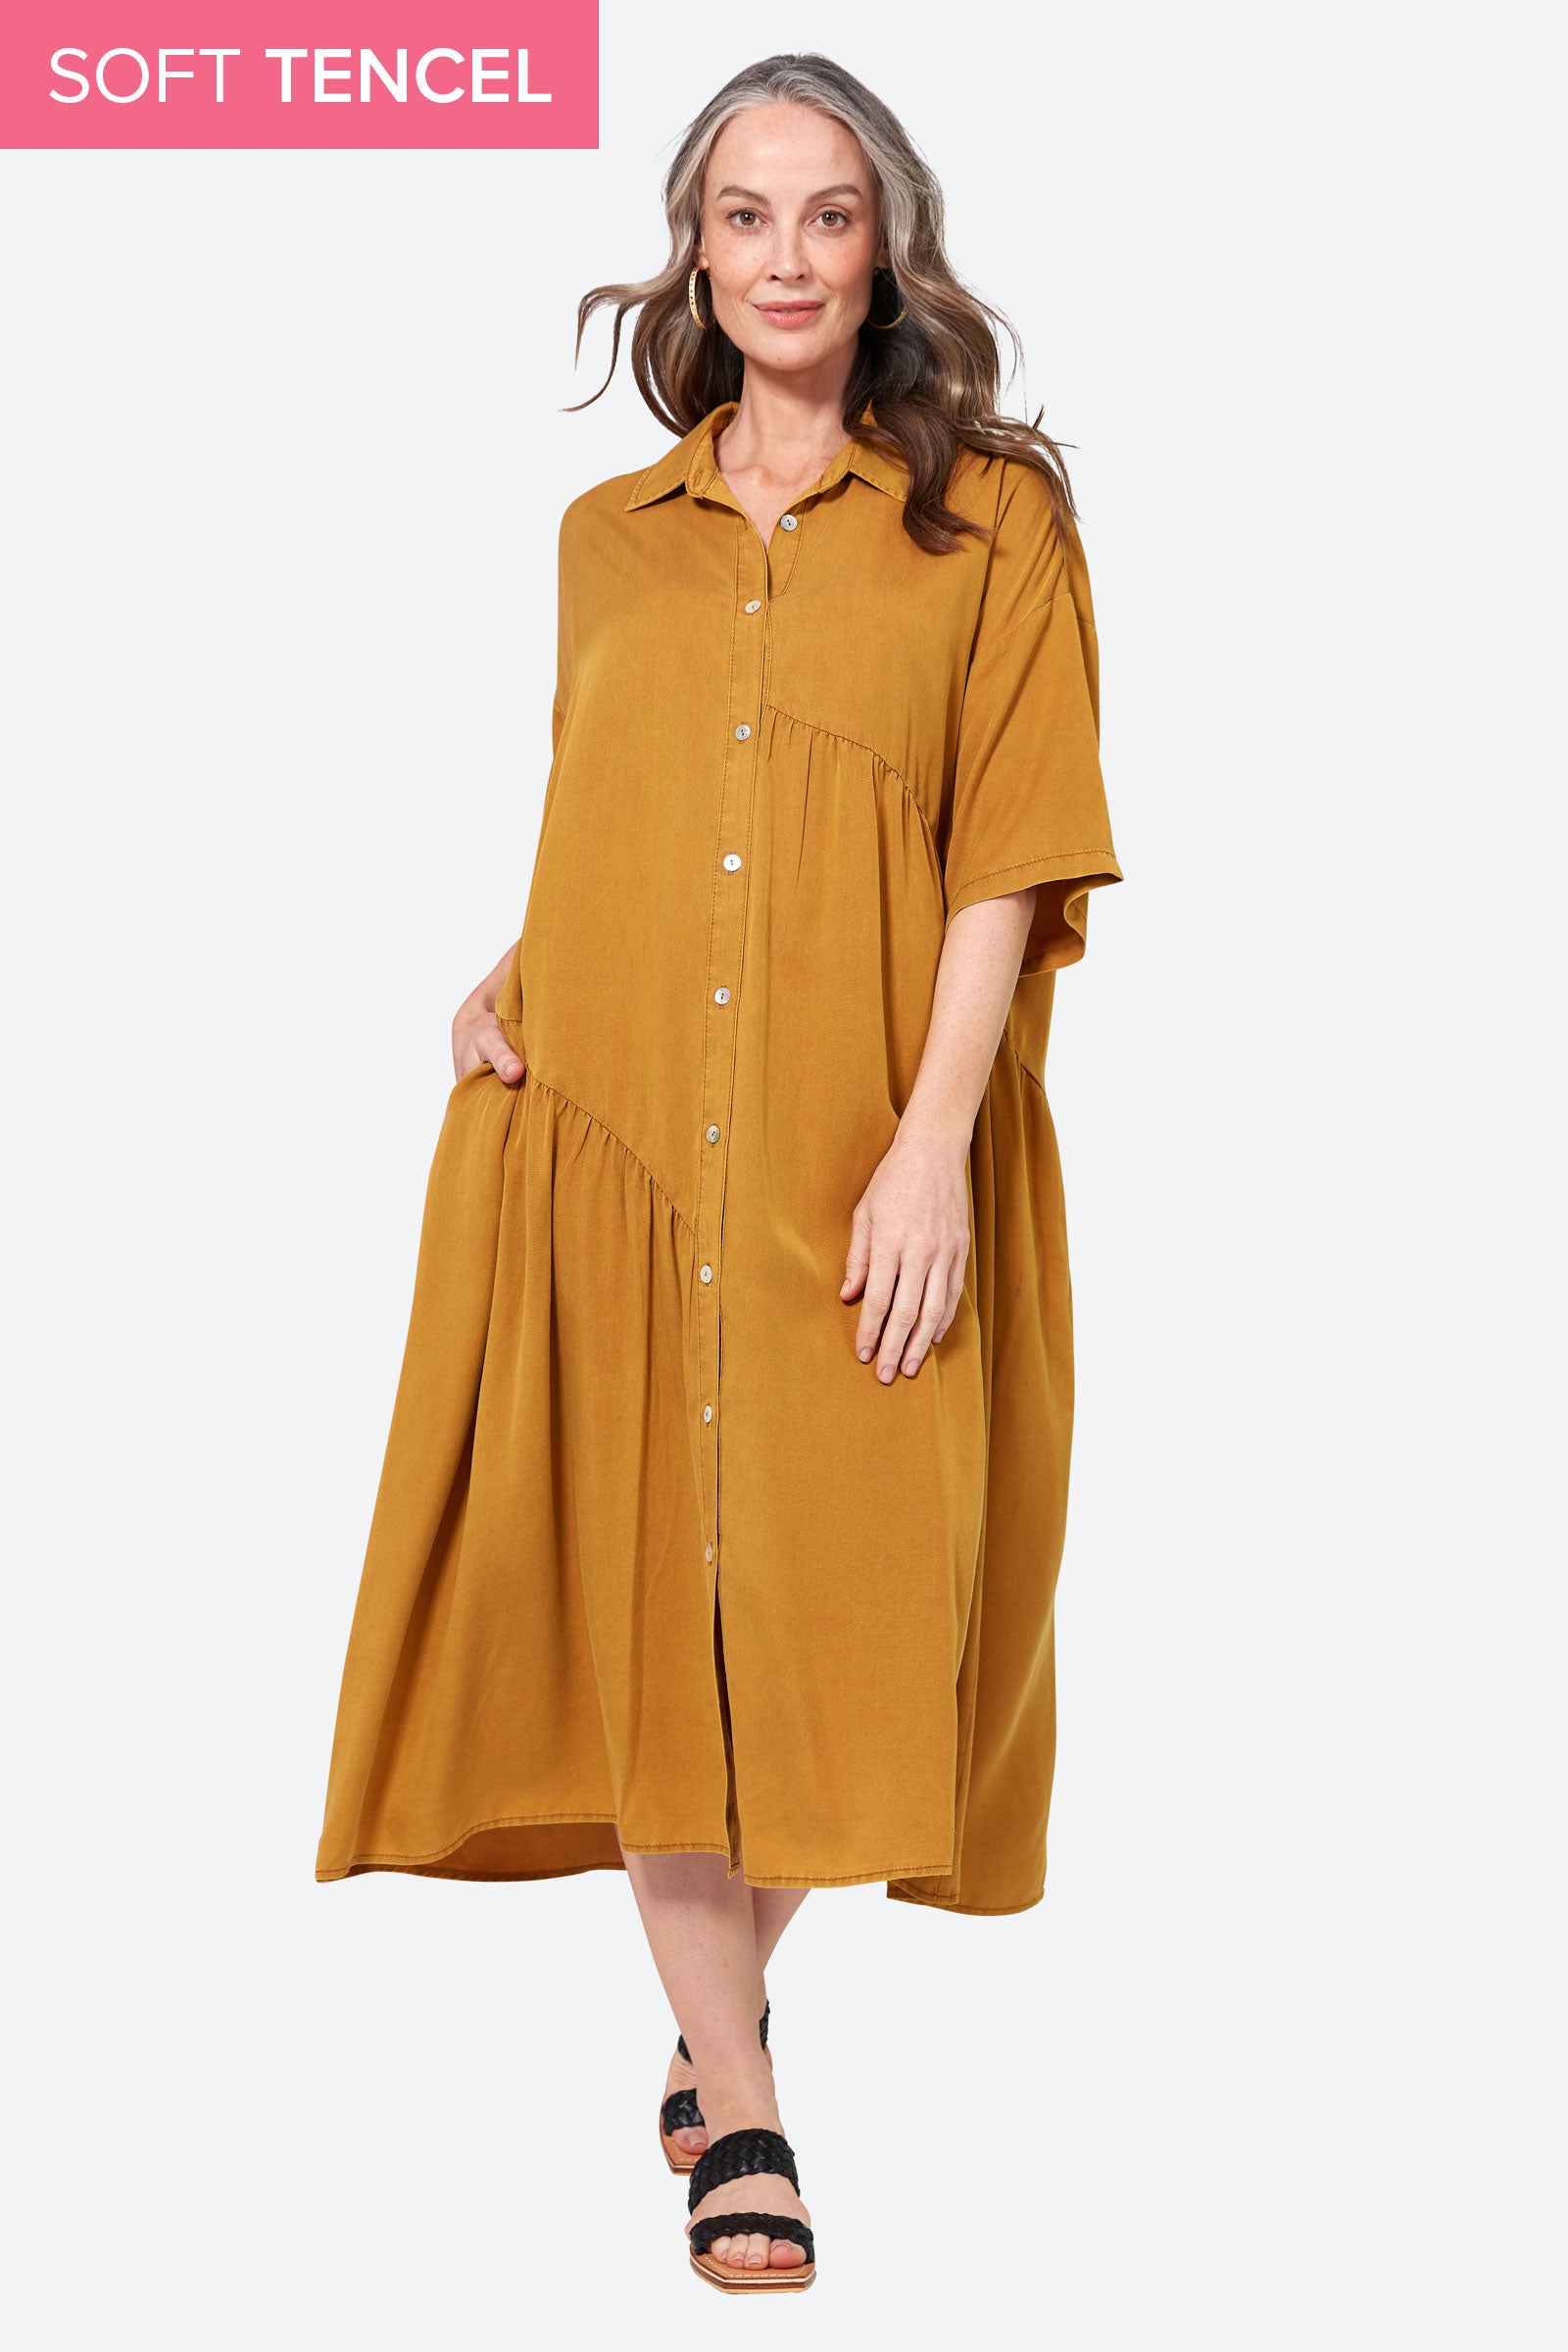 Elan Shirt Dress - Honey - eb&ive Clothing - Shirt Dress One Size